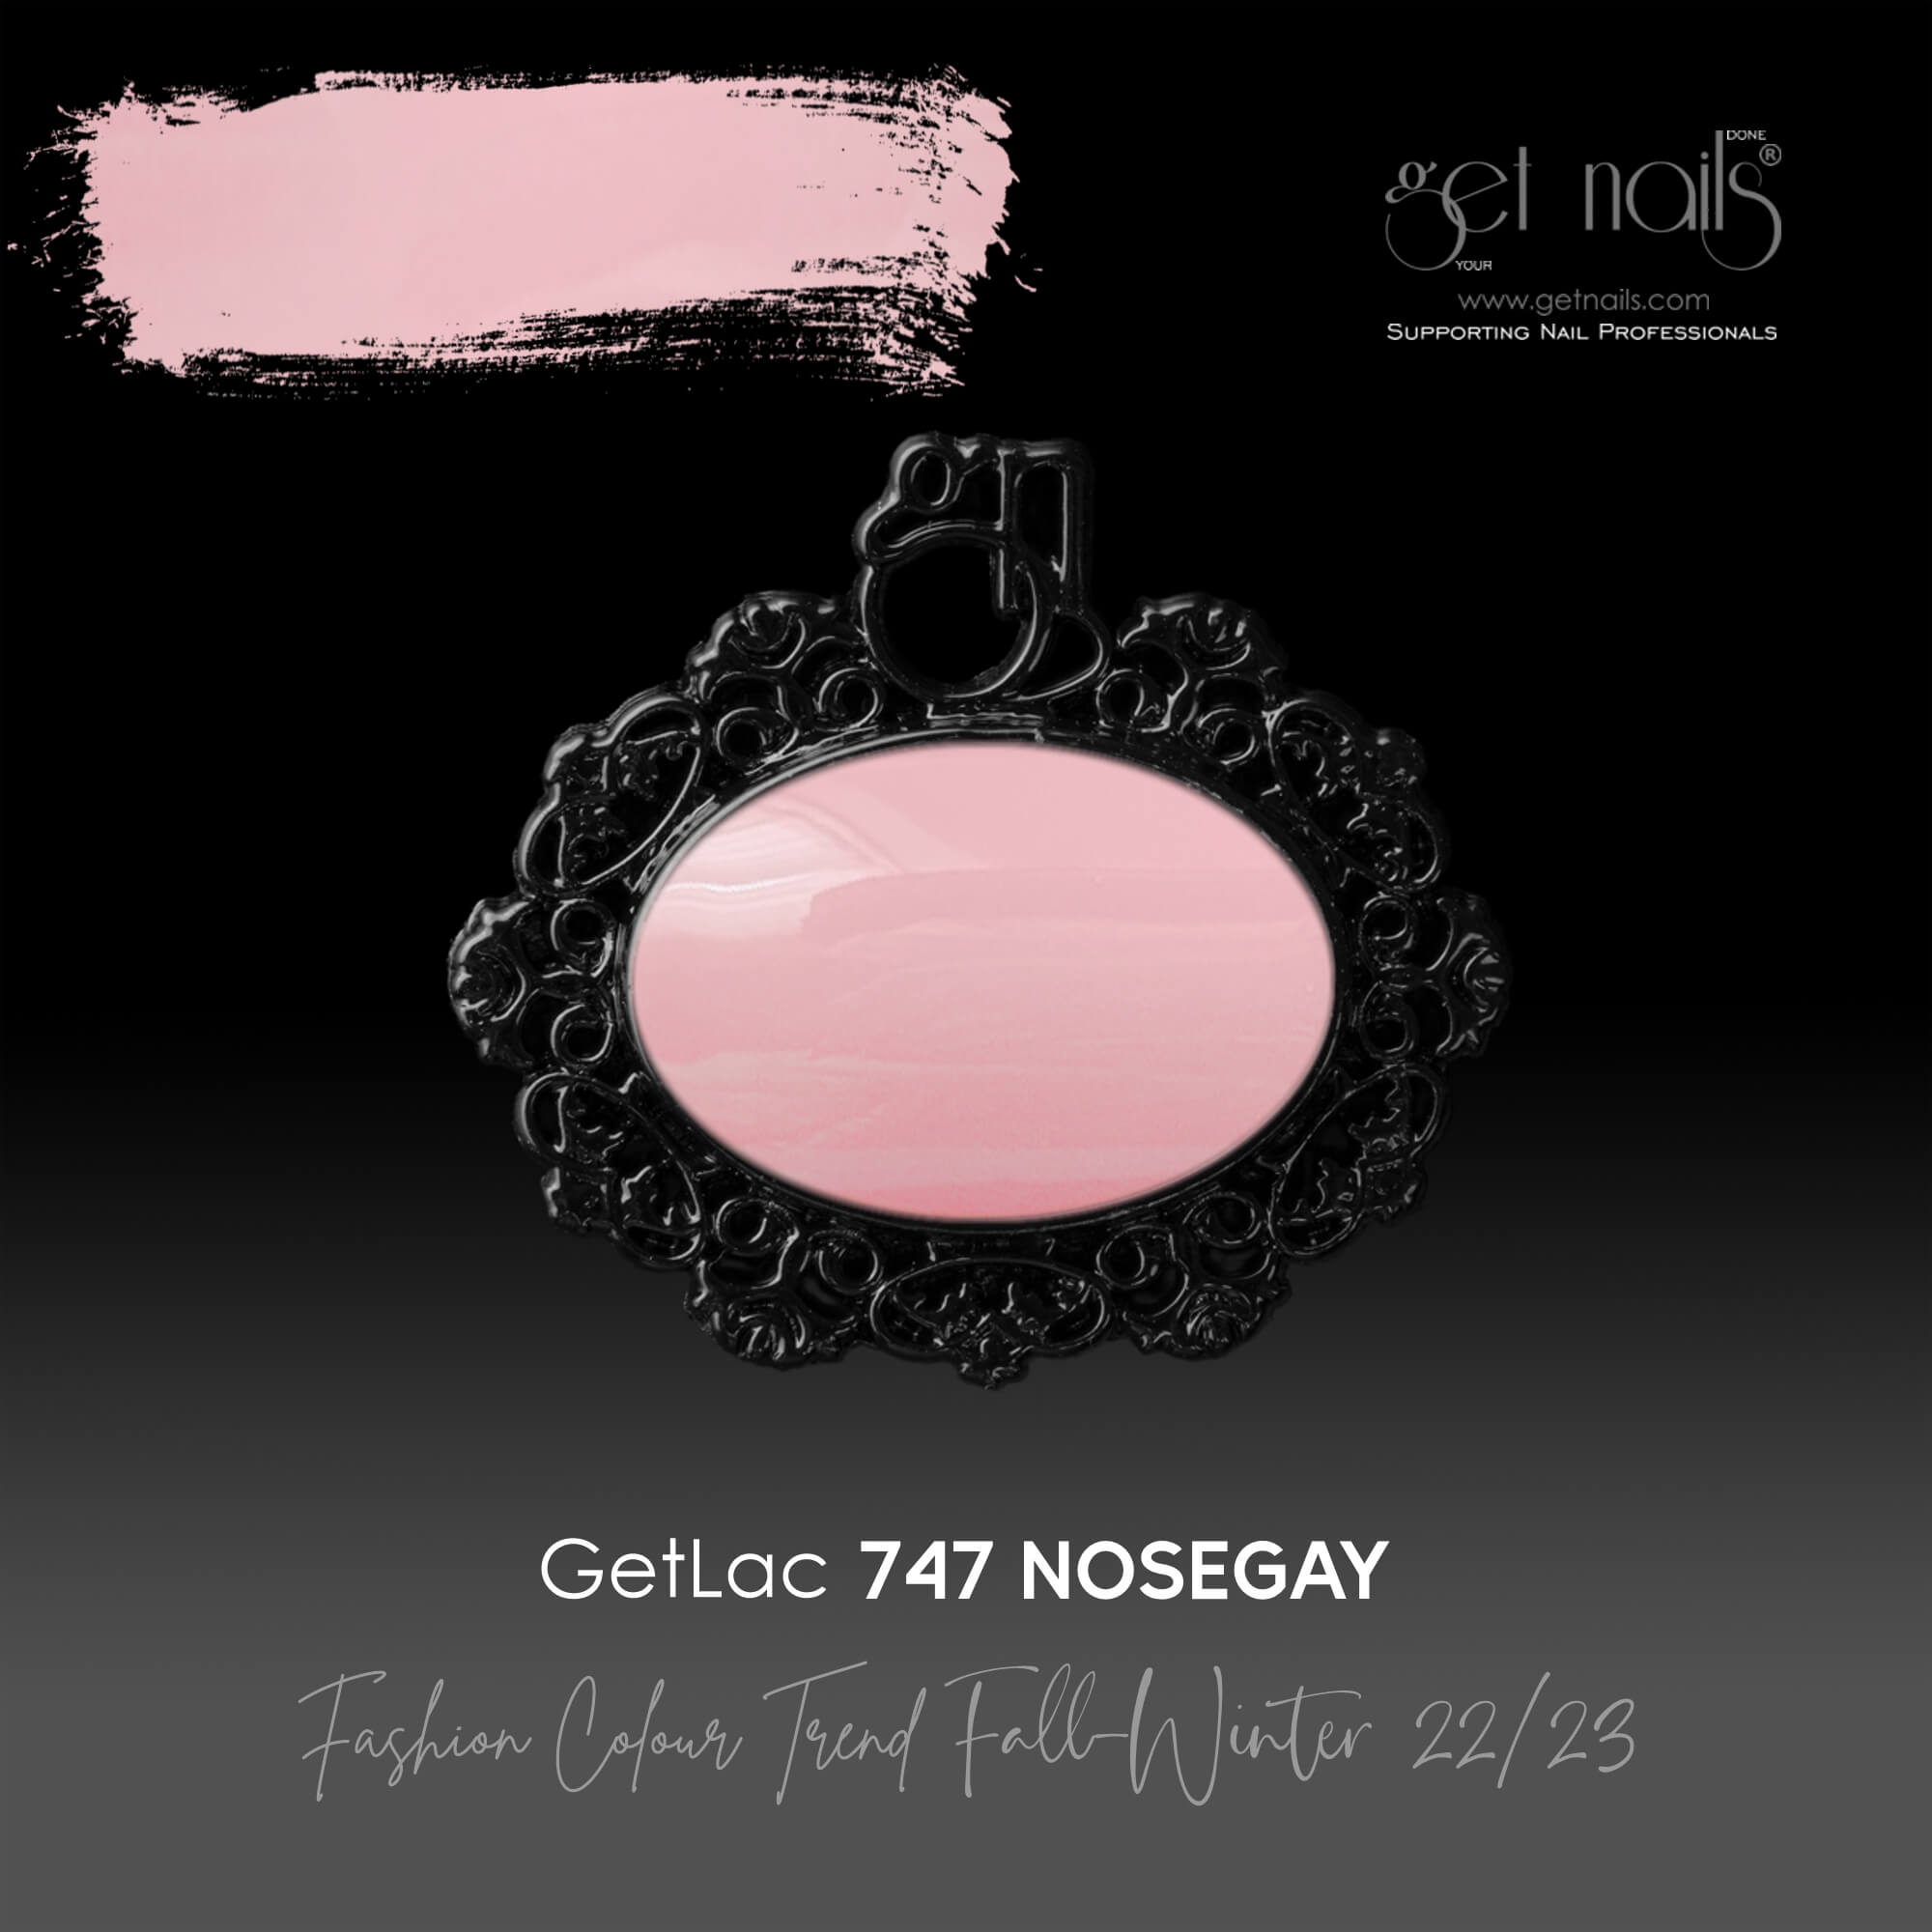 Get Nails Austria - GetLac 747 Nosegay 15g